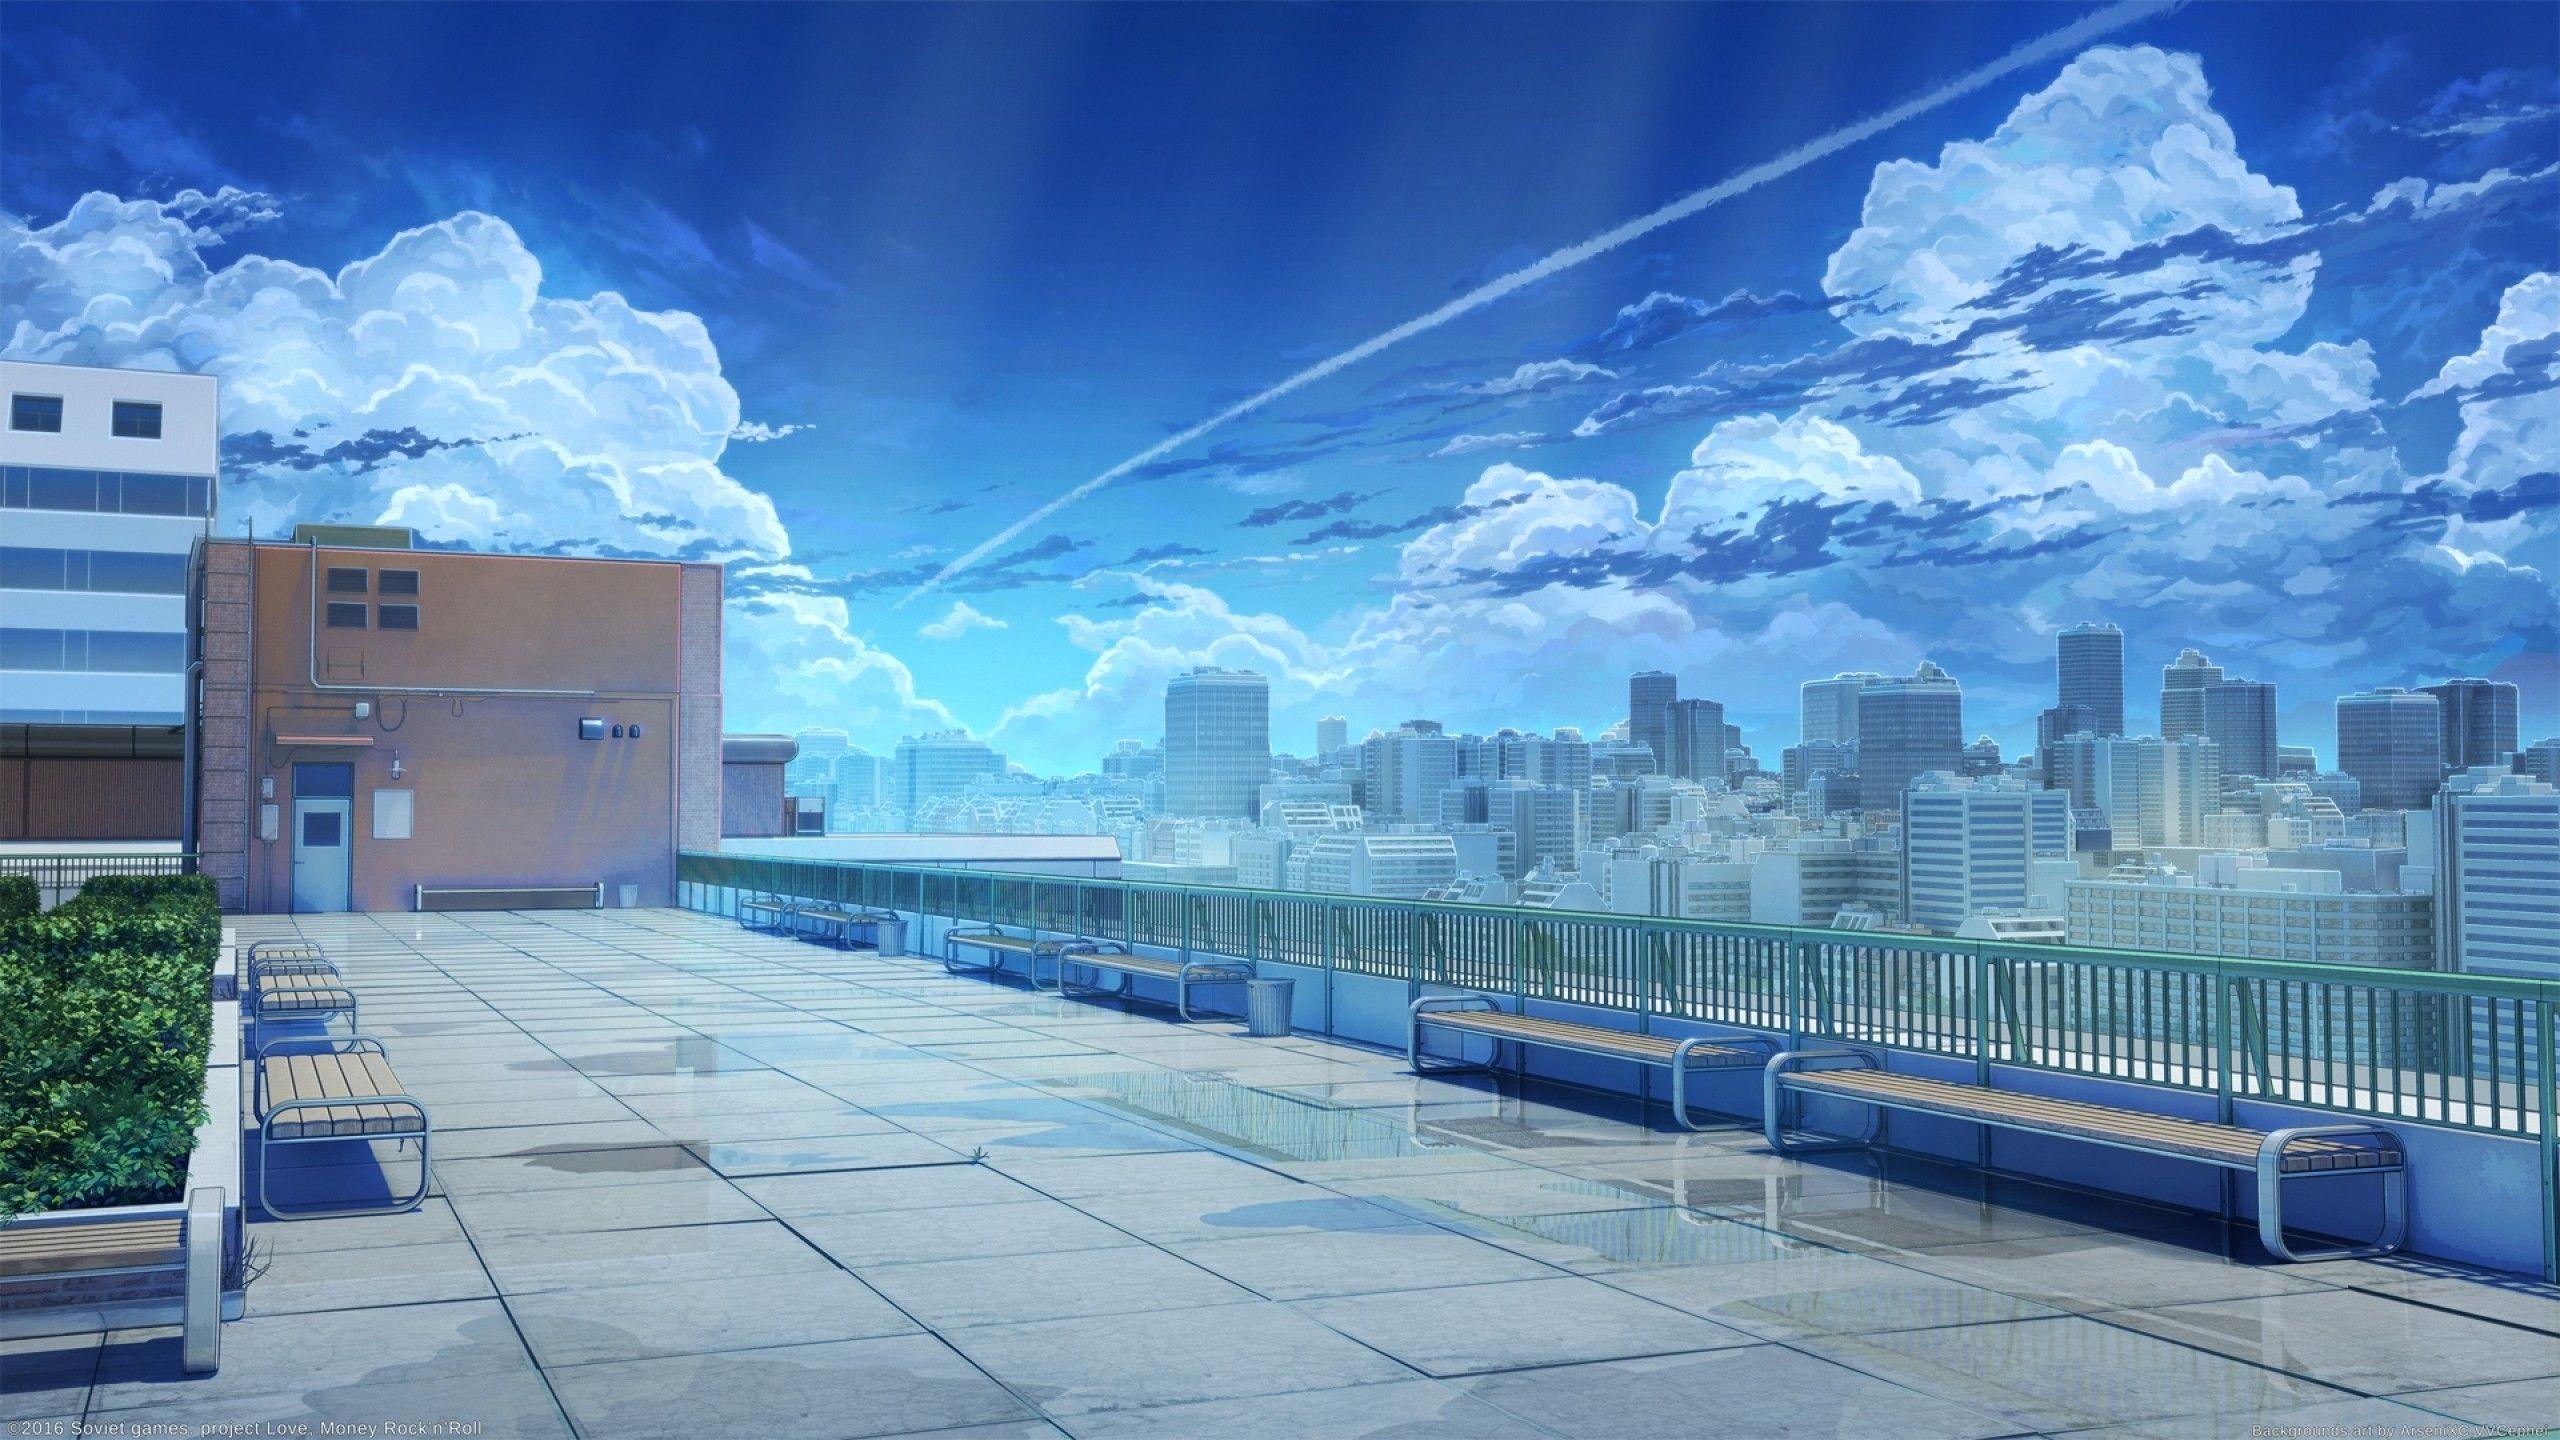 Anime Landscape School Rooftop Sky Clouds Cityscape Buildings